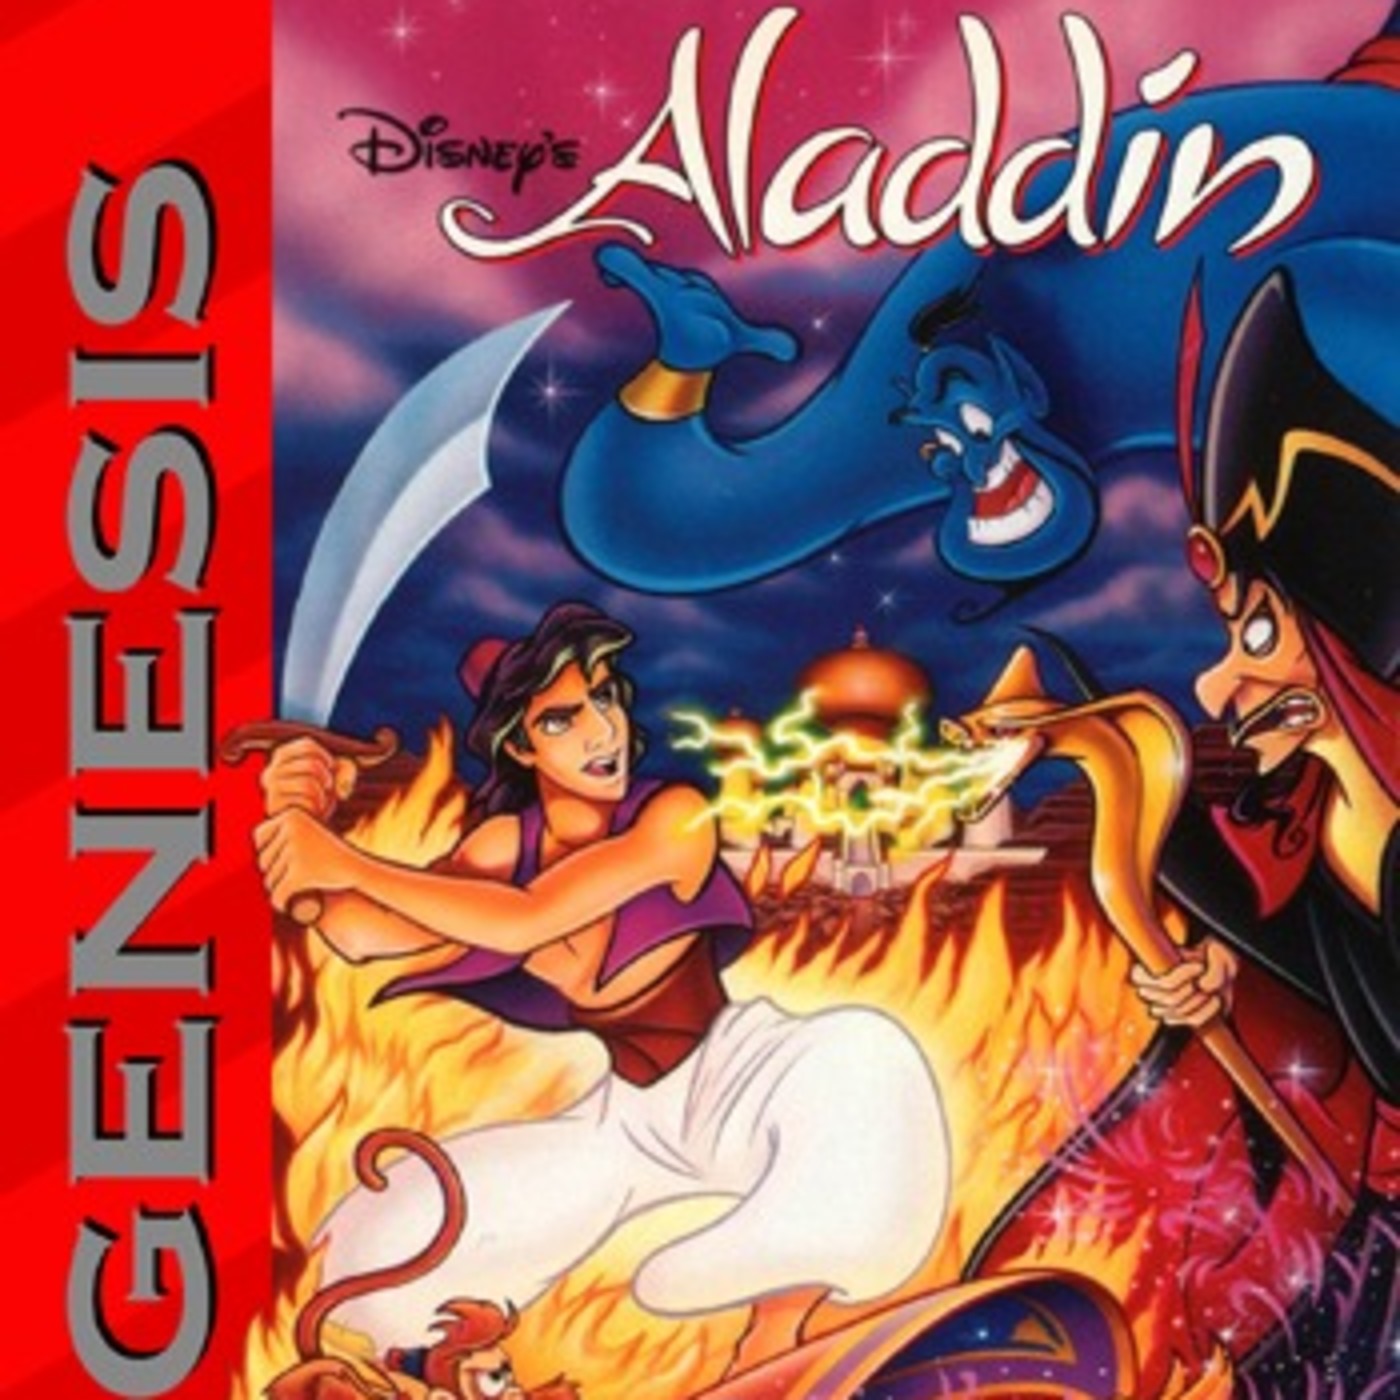 Episode 61 (Aladdin)